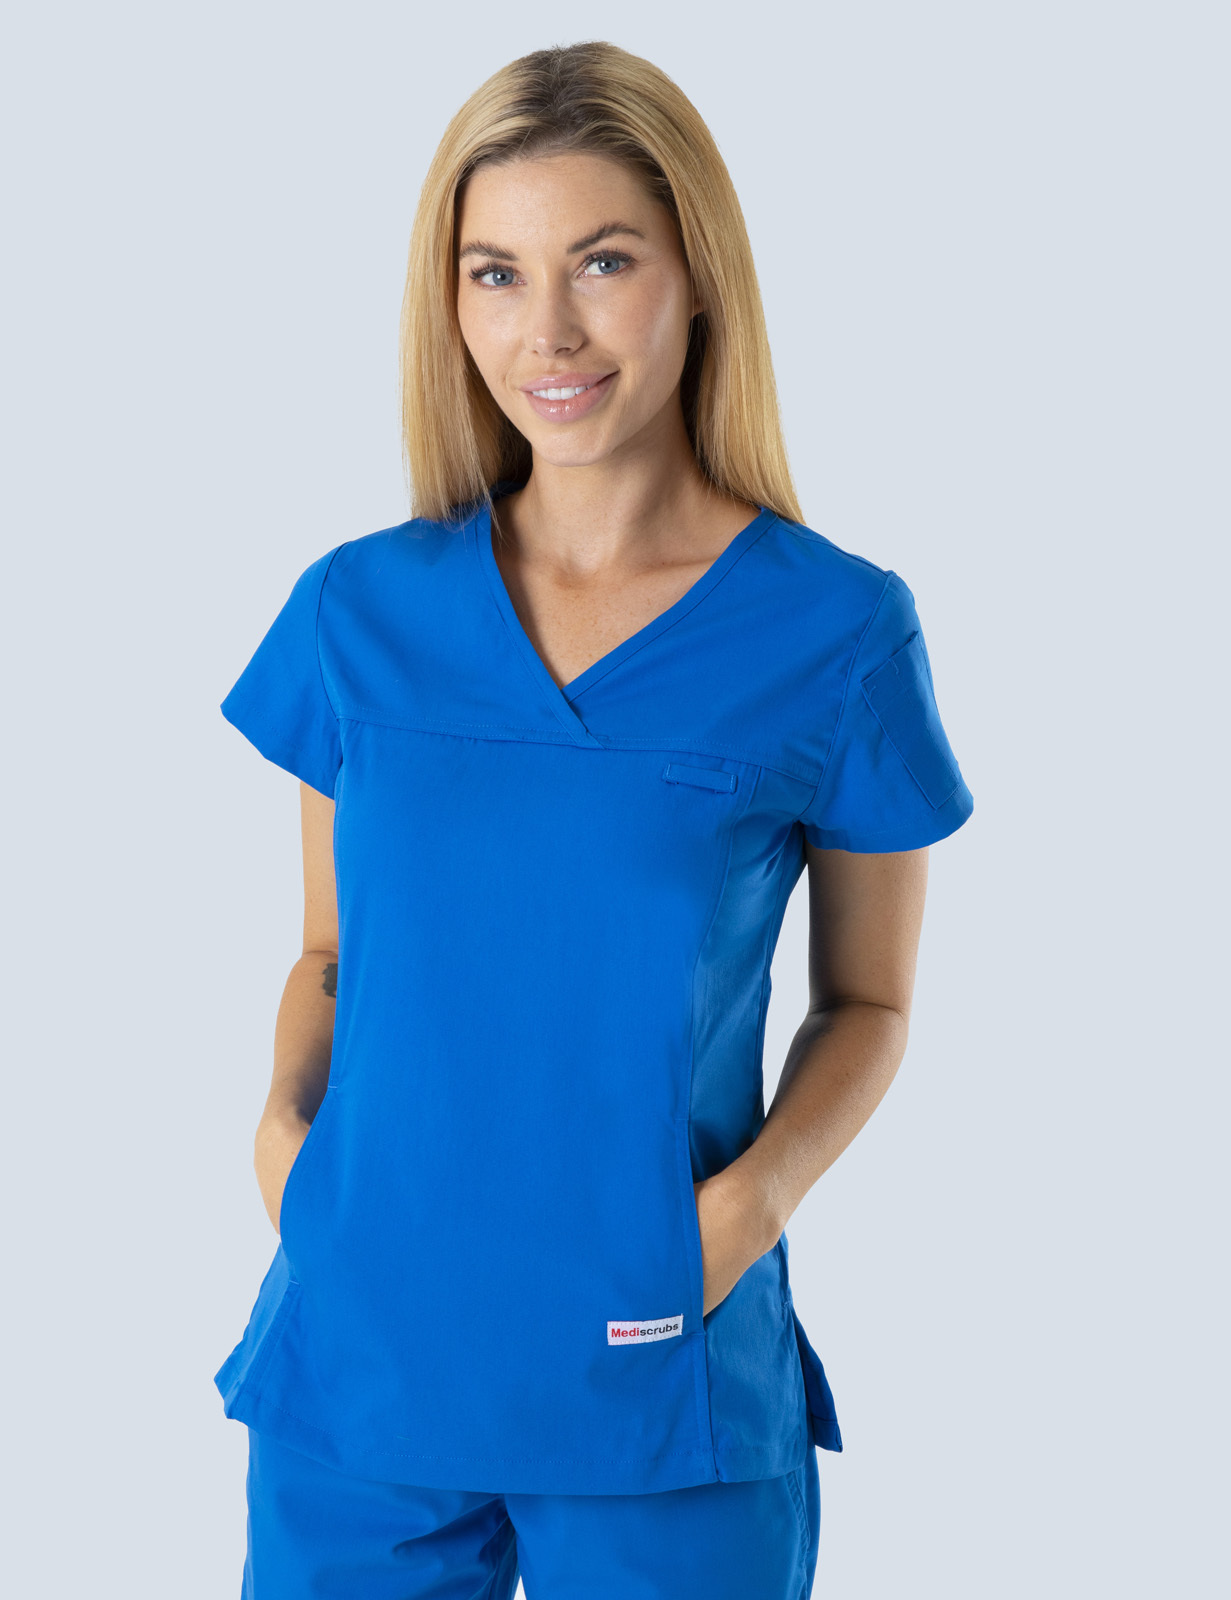 Queensland Children's Hospital Emergency Department Nurse Unit Manager Uniform Top Bundle  (Women's Fit Top in Royal incl Logos)